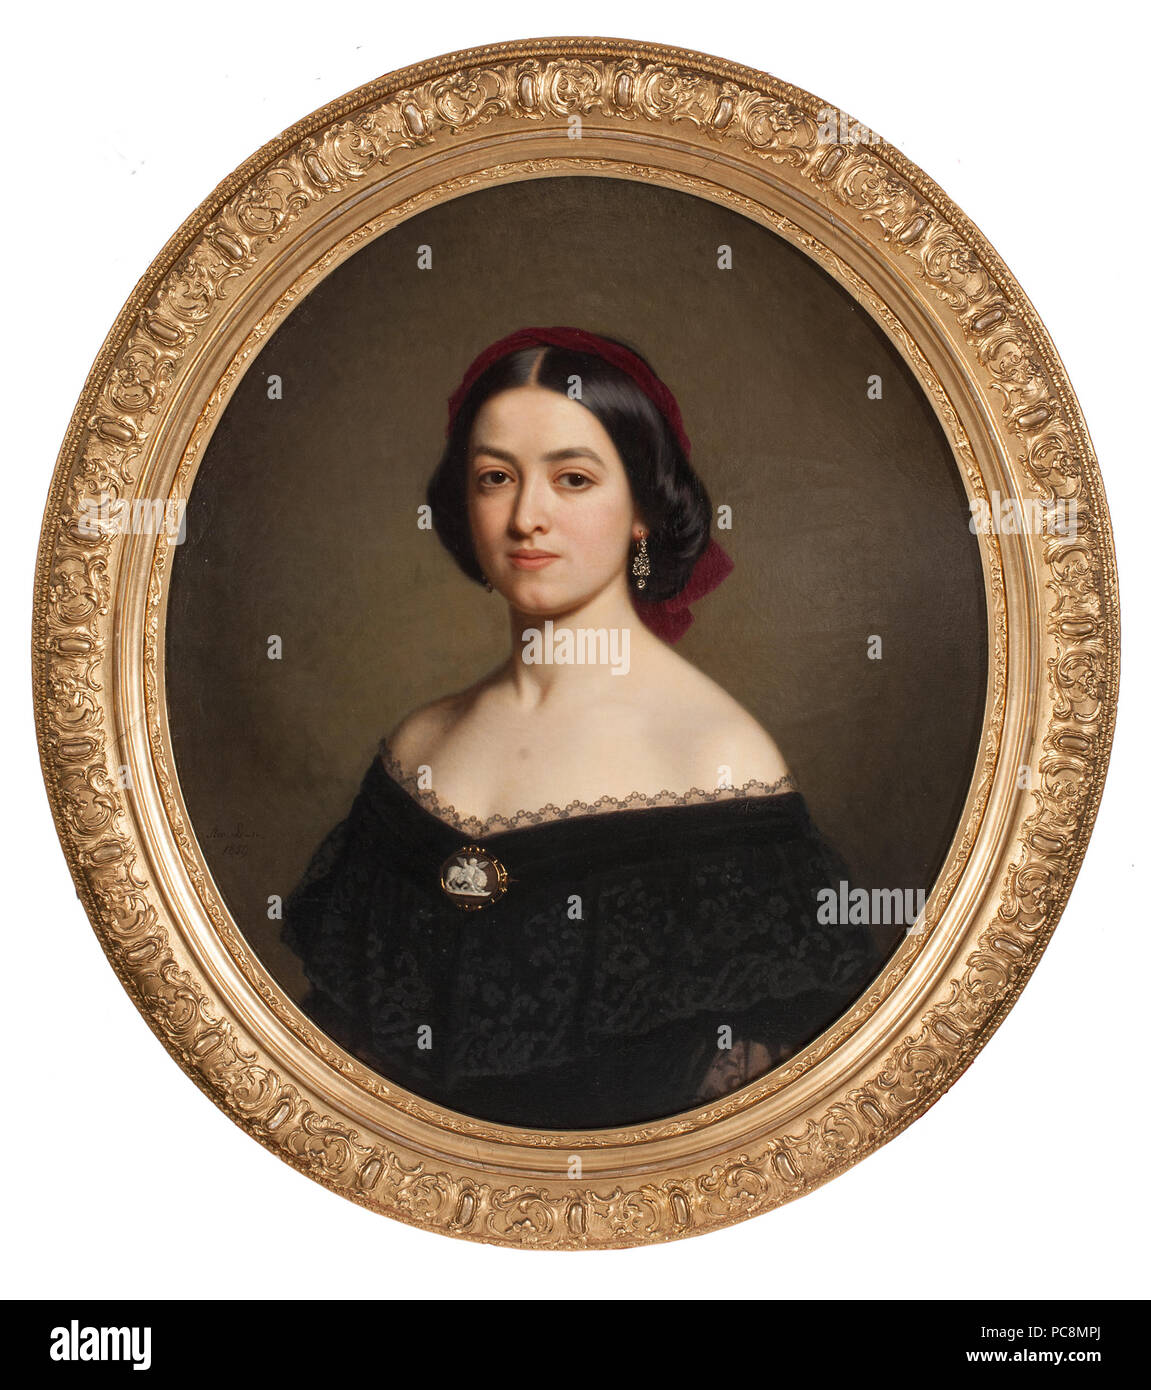 67 Okänd kvinna (Amalia Lindegren) - Nationalmuseum - 174281 Stock Photo